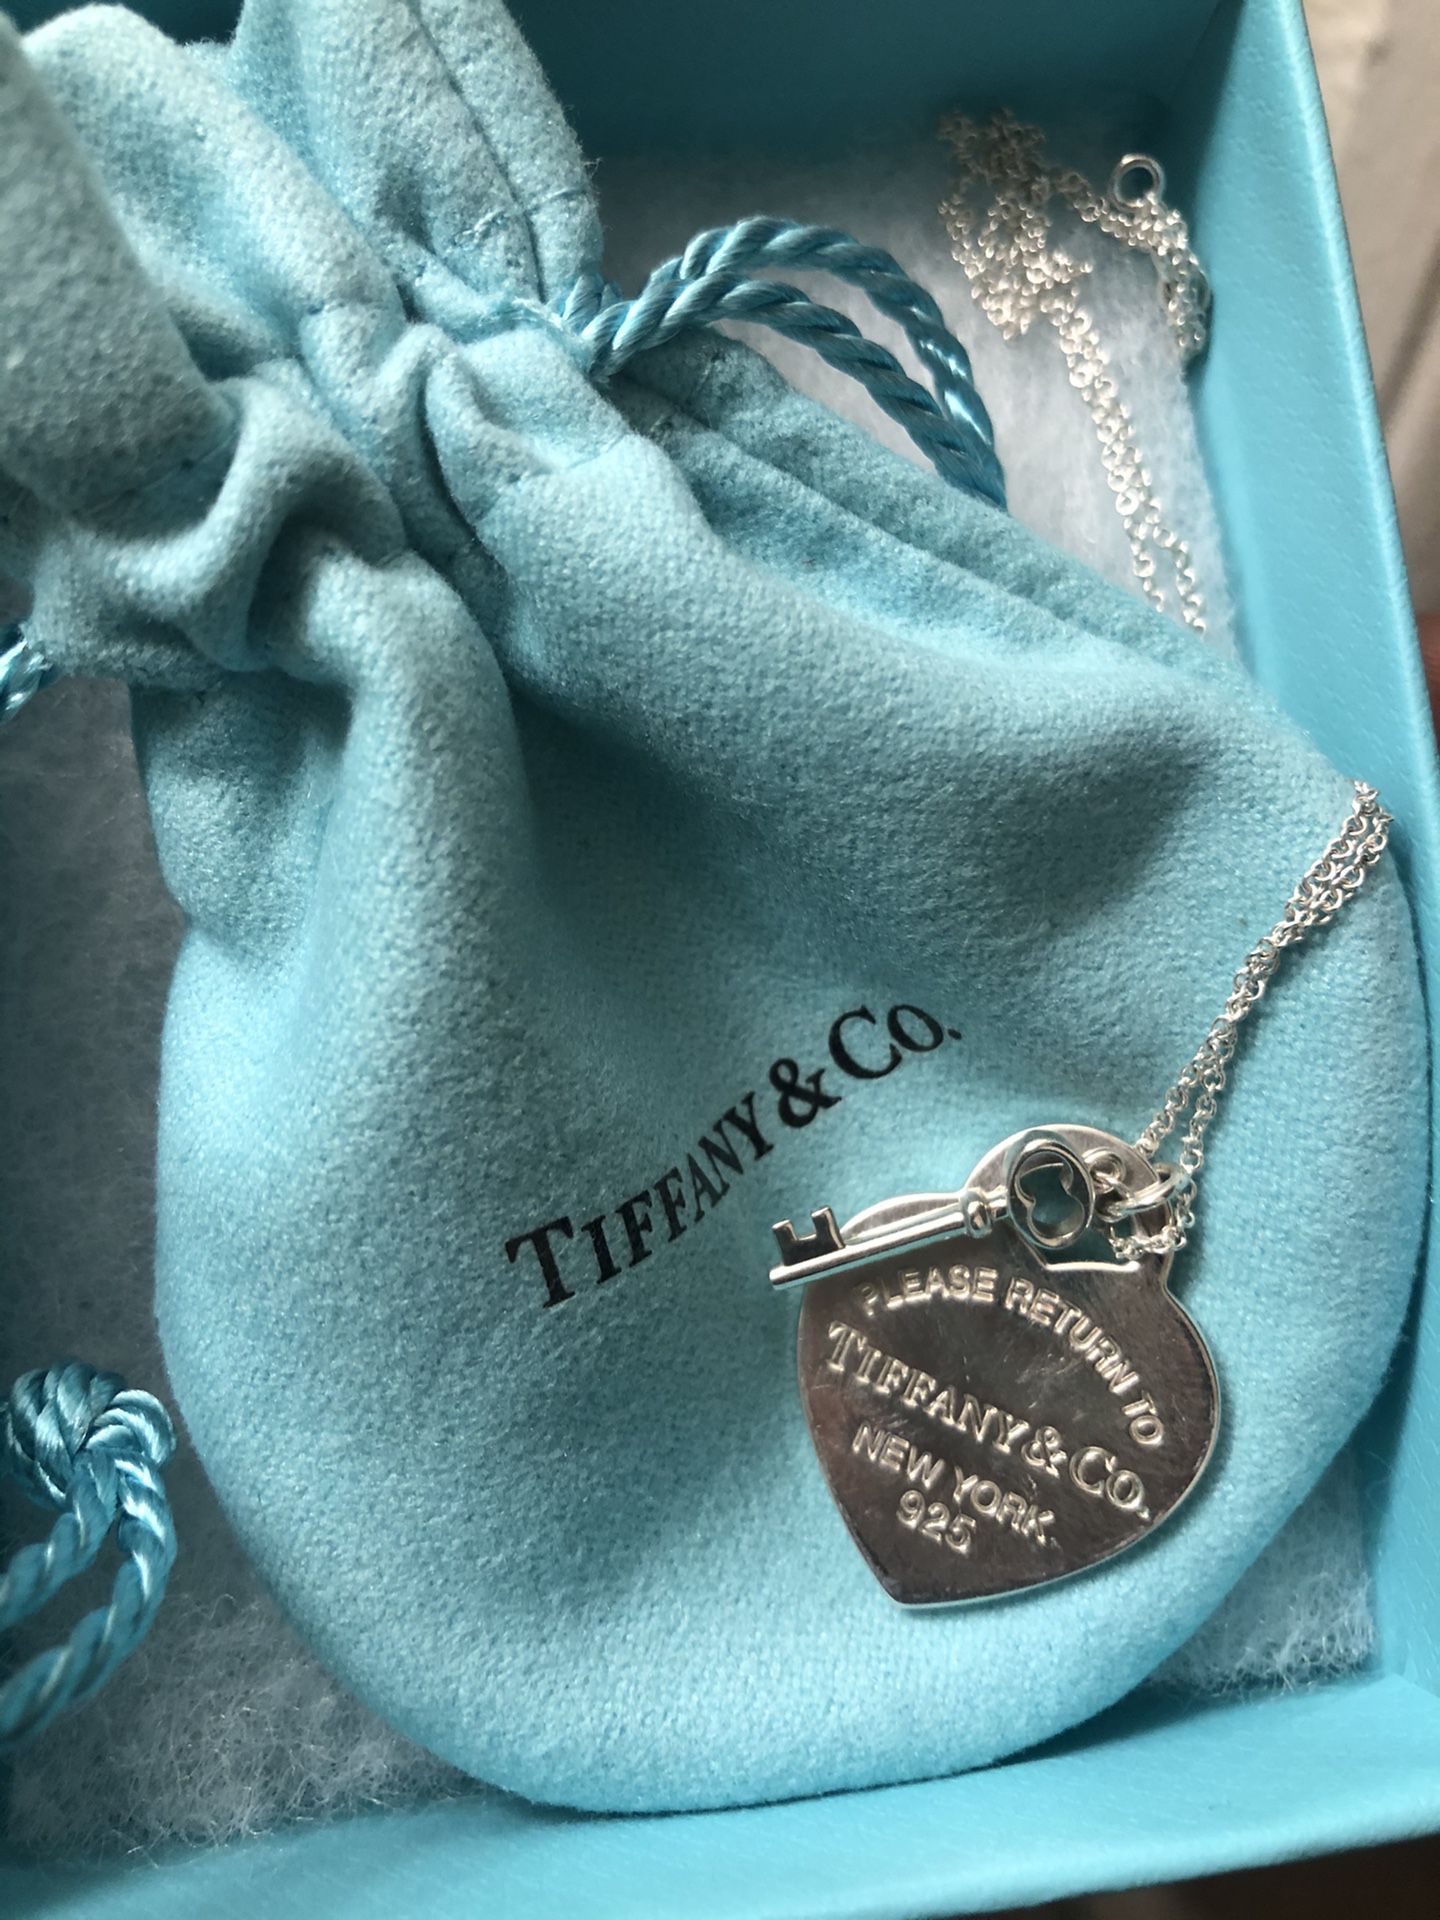 Tiffany & Co. Silver Necklace